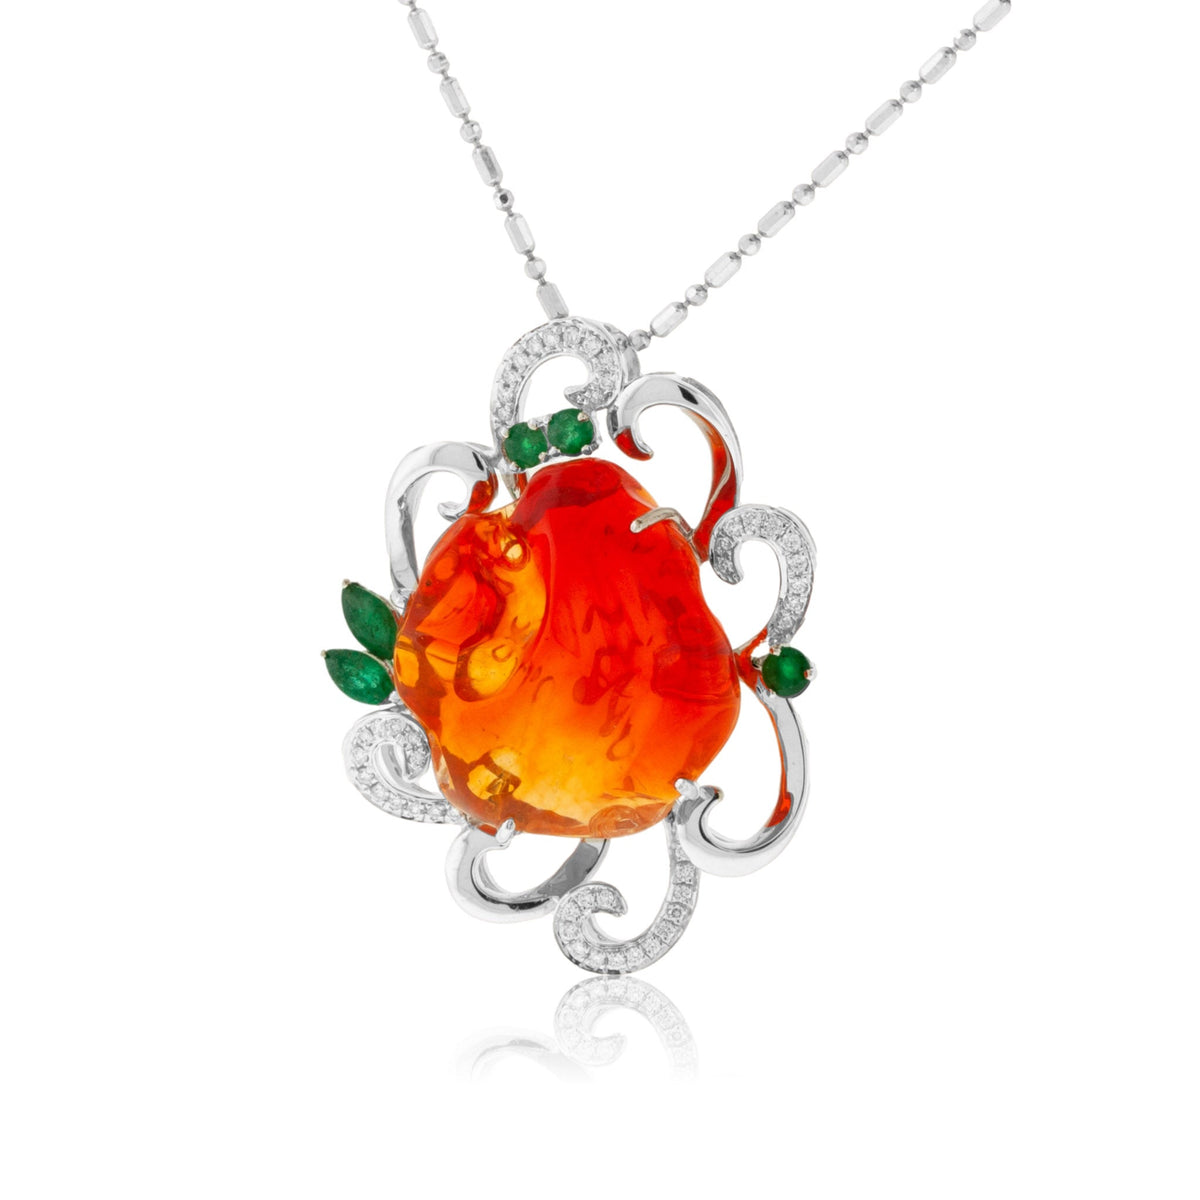 fire opal necklace